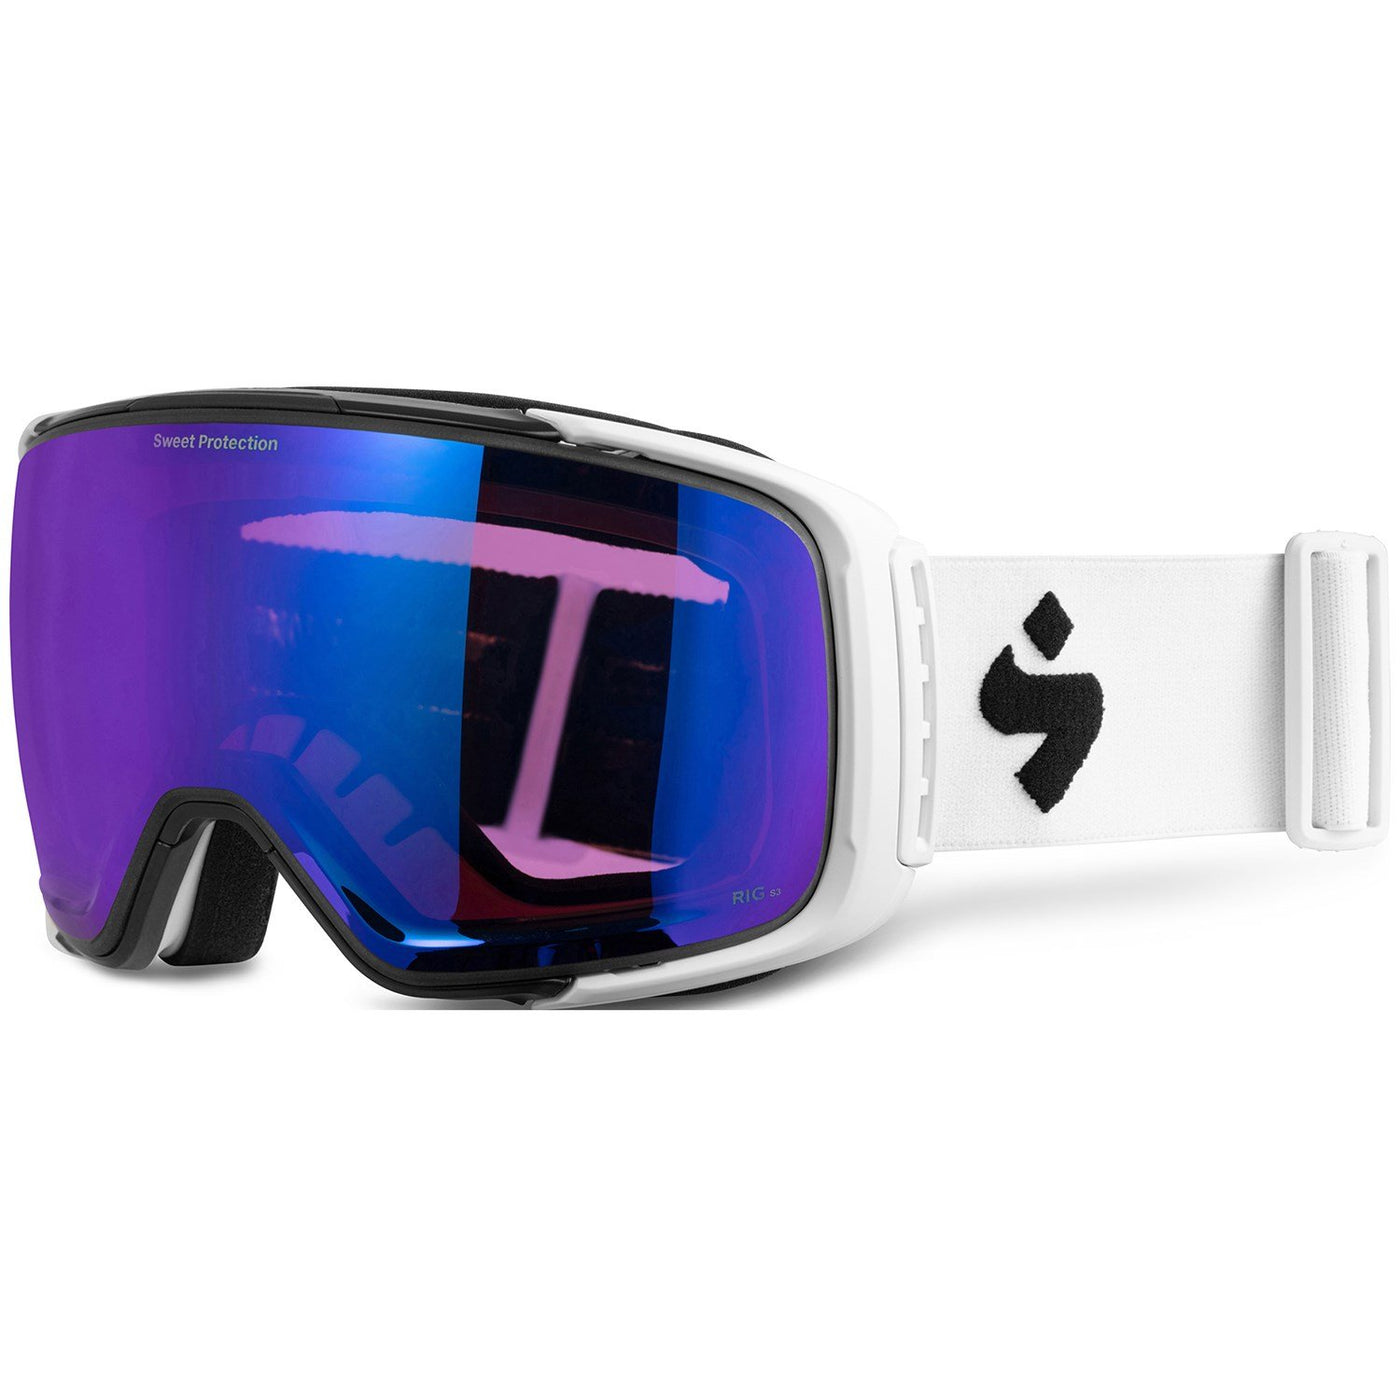 Interstellar RIG-W2020 Village Ski Hut Sweet Protection Adult Goggles, Hardgoods accessories, Winter 2020